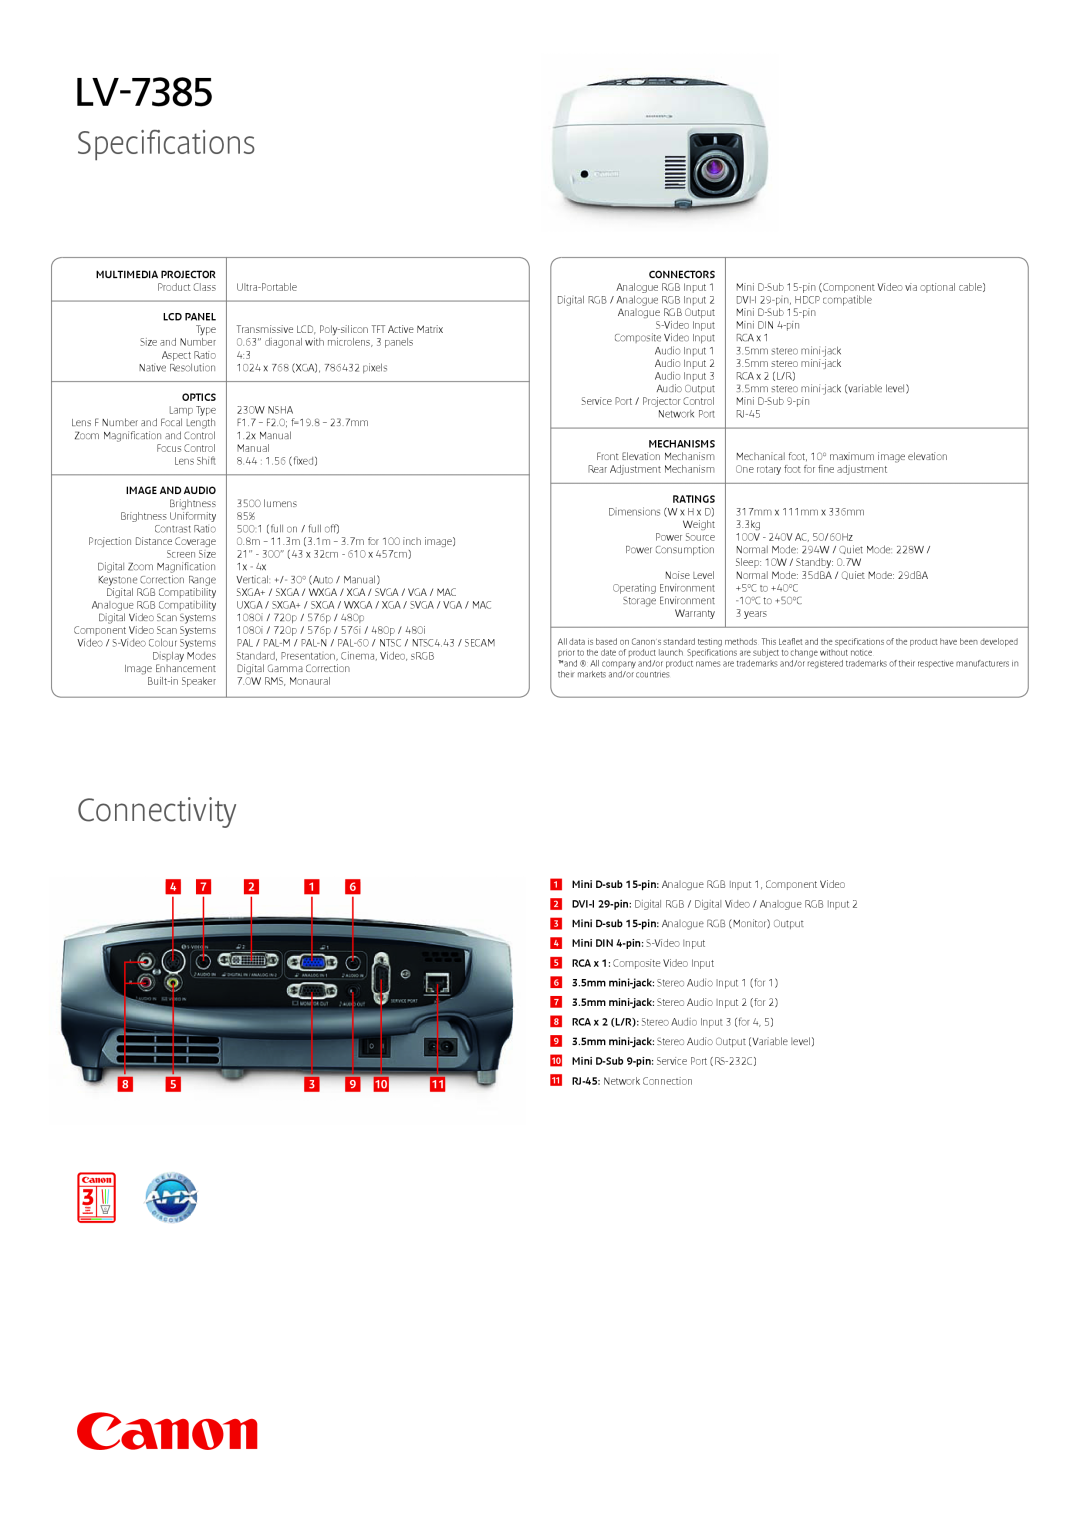 Canon LV-7385 warranty Specifications, Connectivity, Multimedia Projector, Connectors 